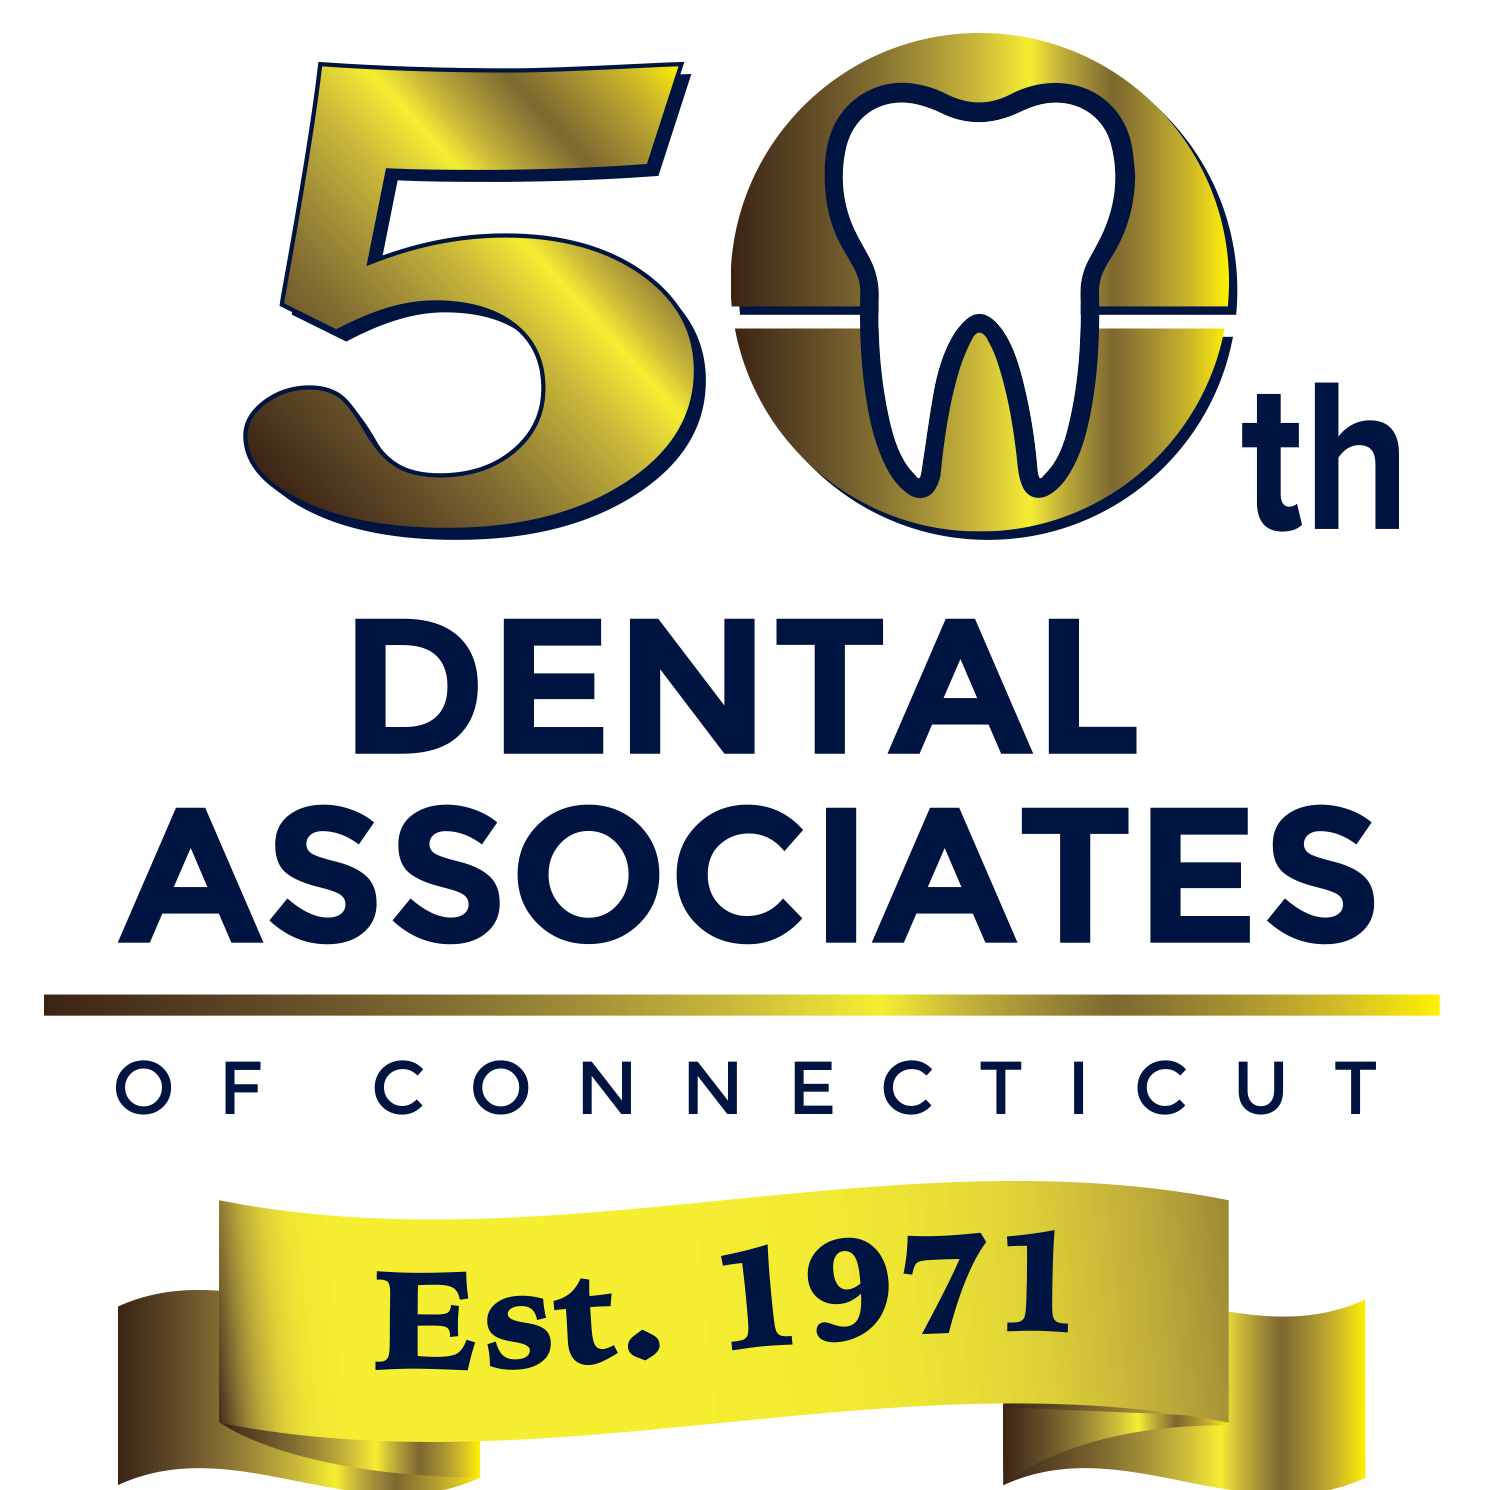 Dental Associates of Connecticut